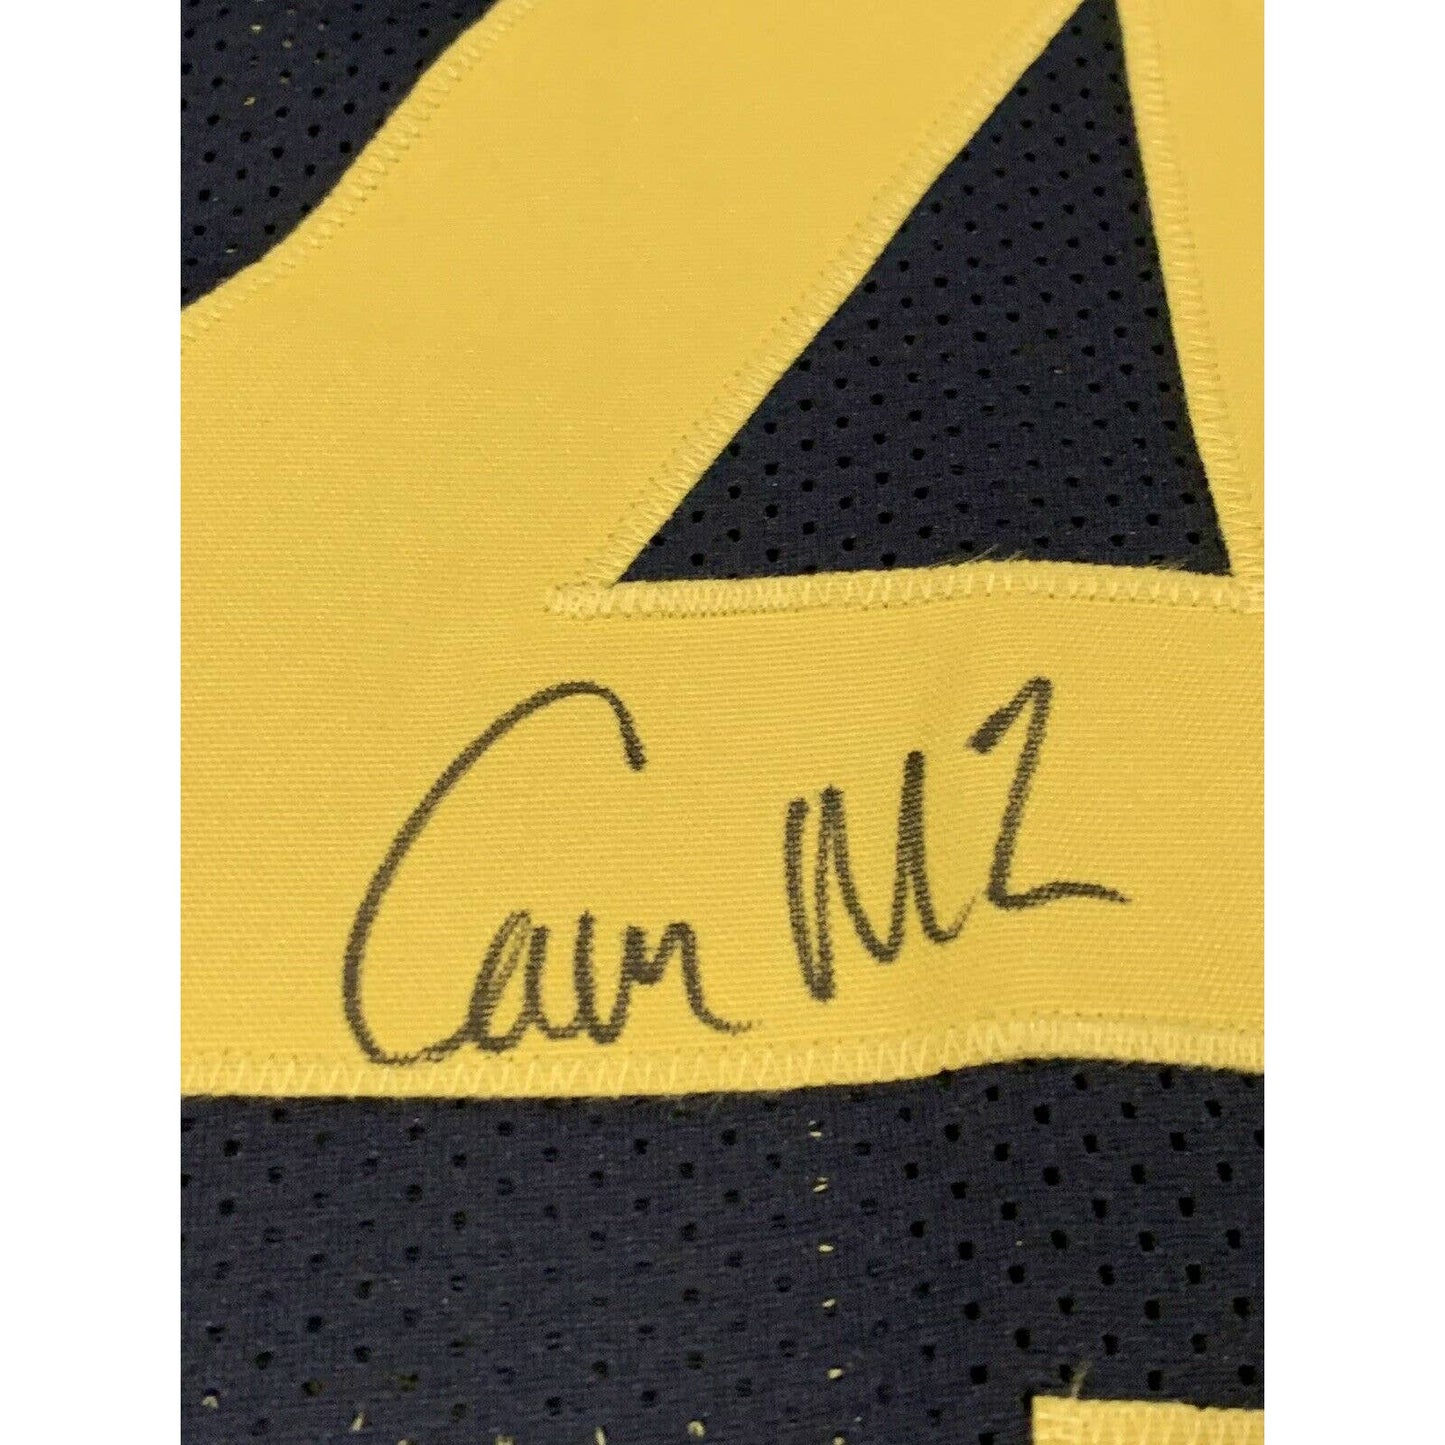 Cameron McGrone Autographed/Signed Jersey Beckett COA Michigan Wolverines - TreasuresEvolved